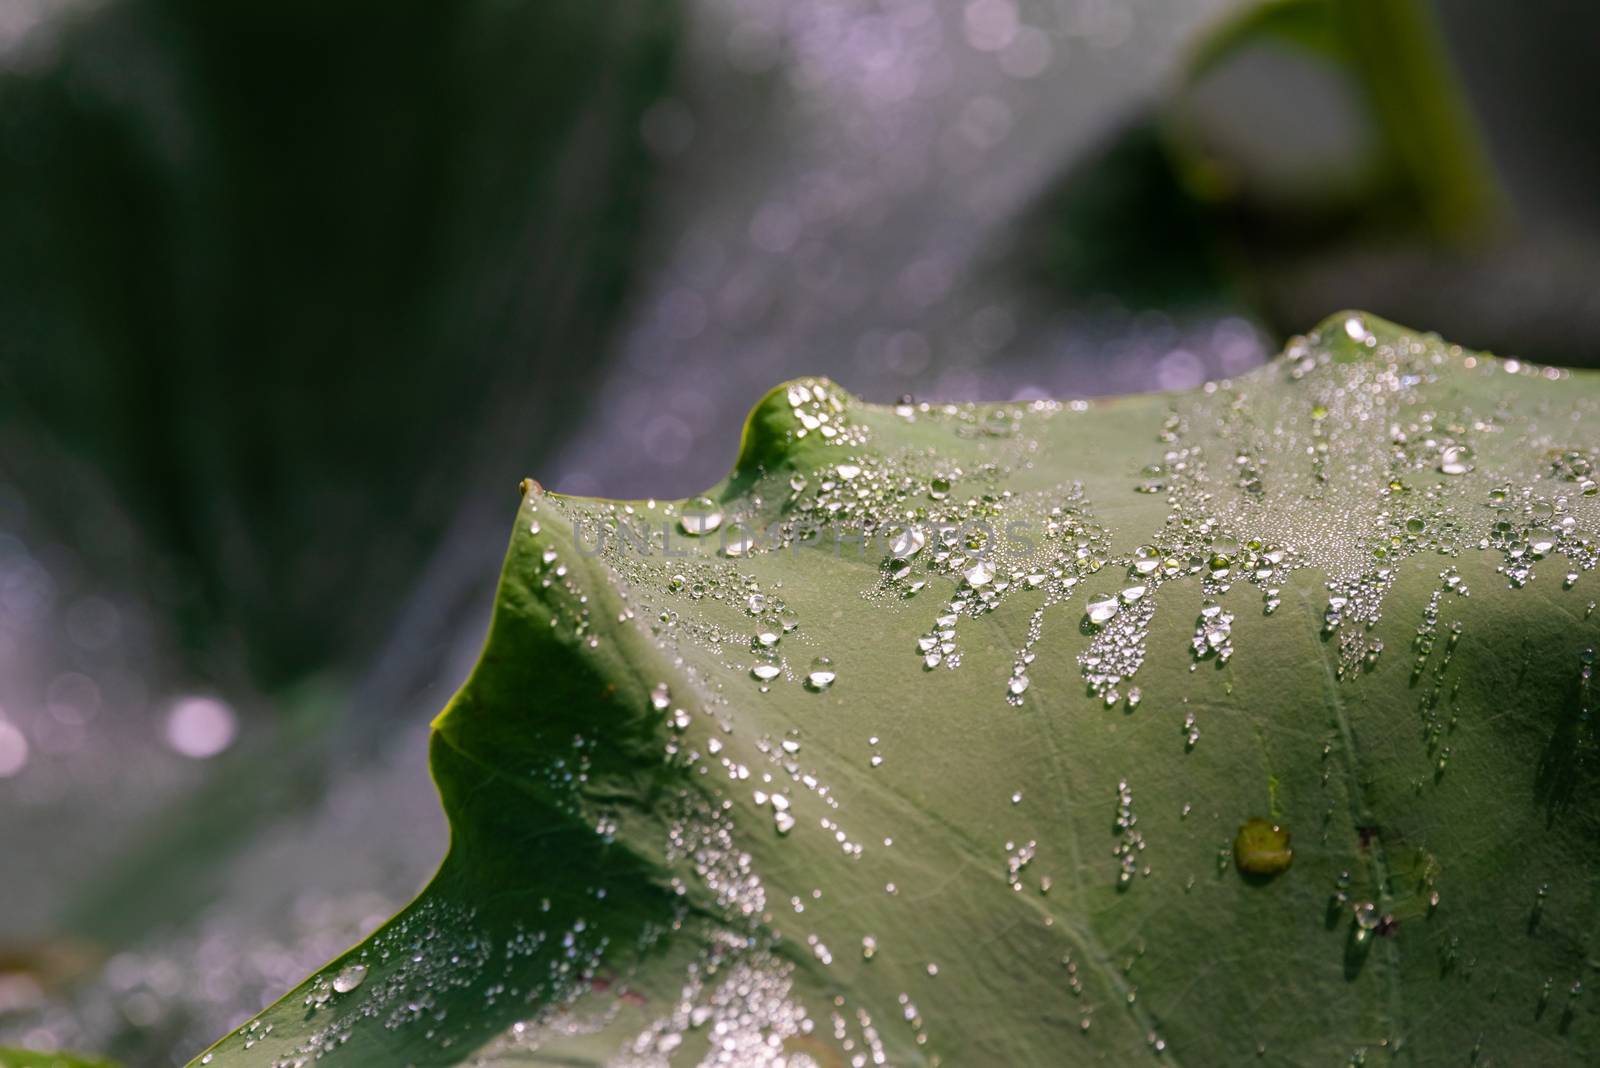 Water droplets on a lotus leaf by LP2Studio